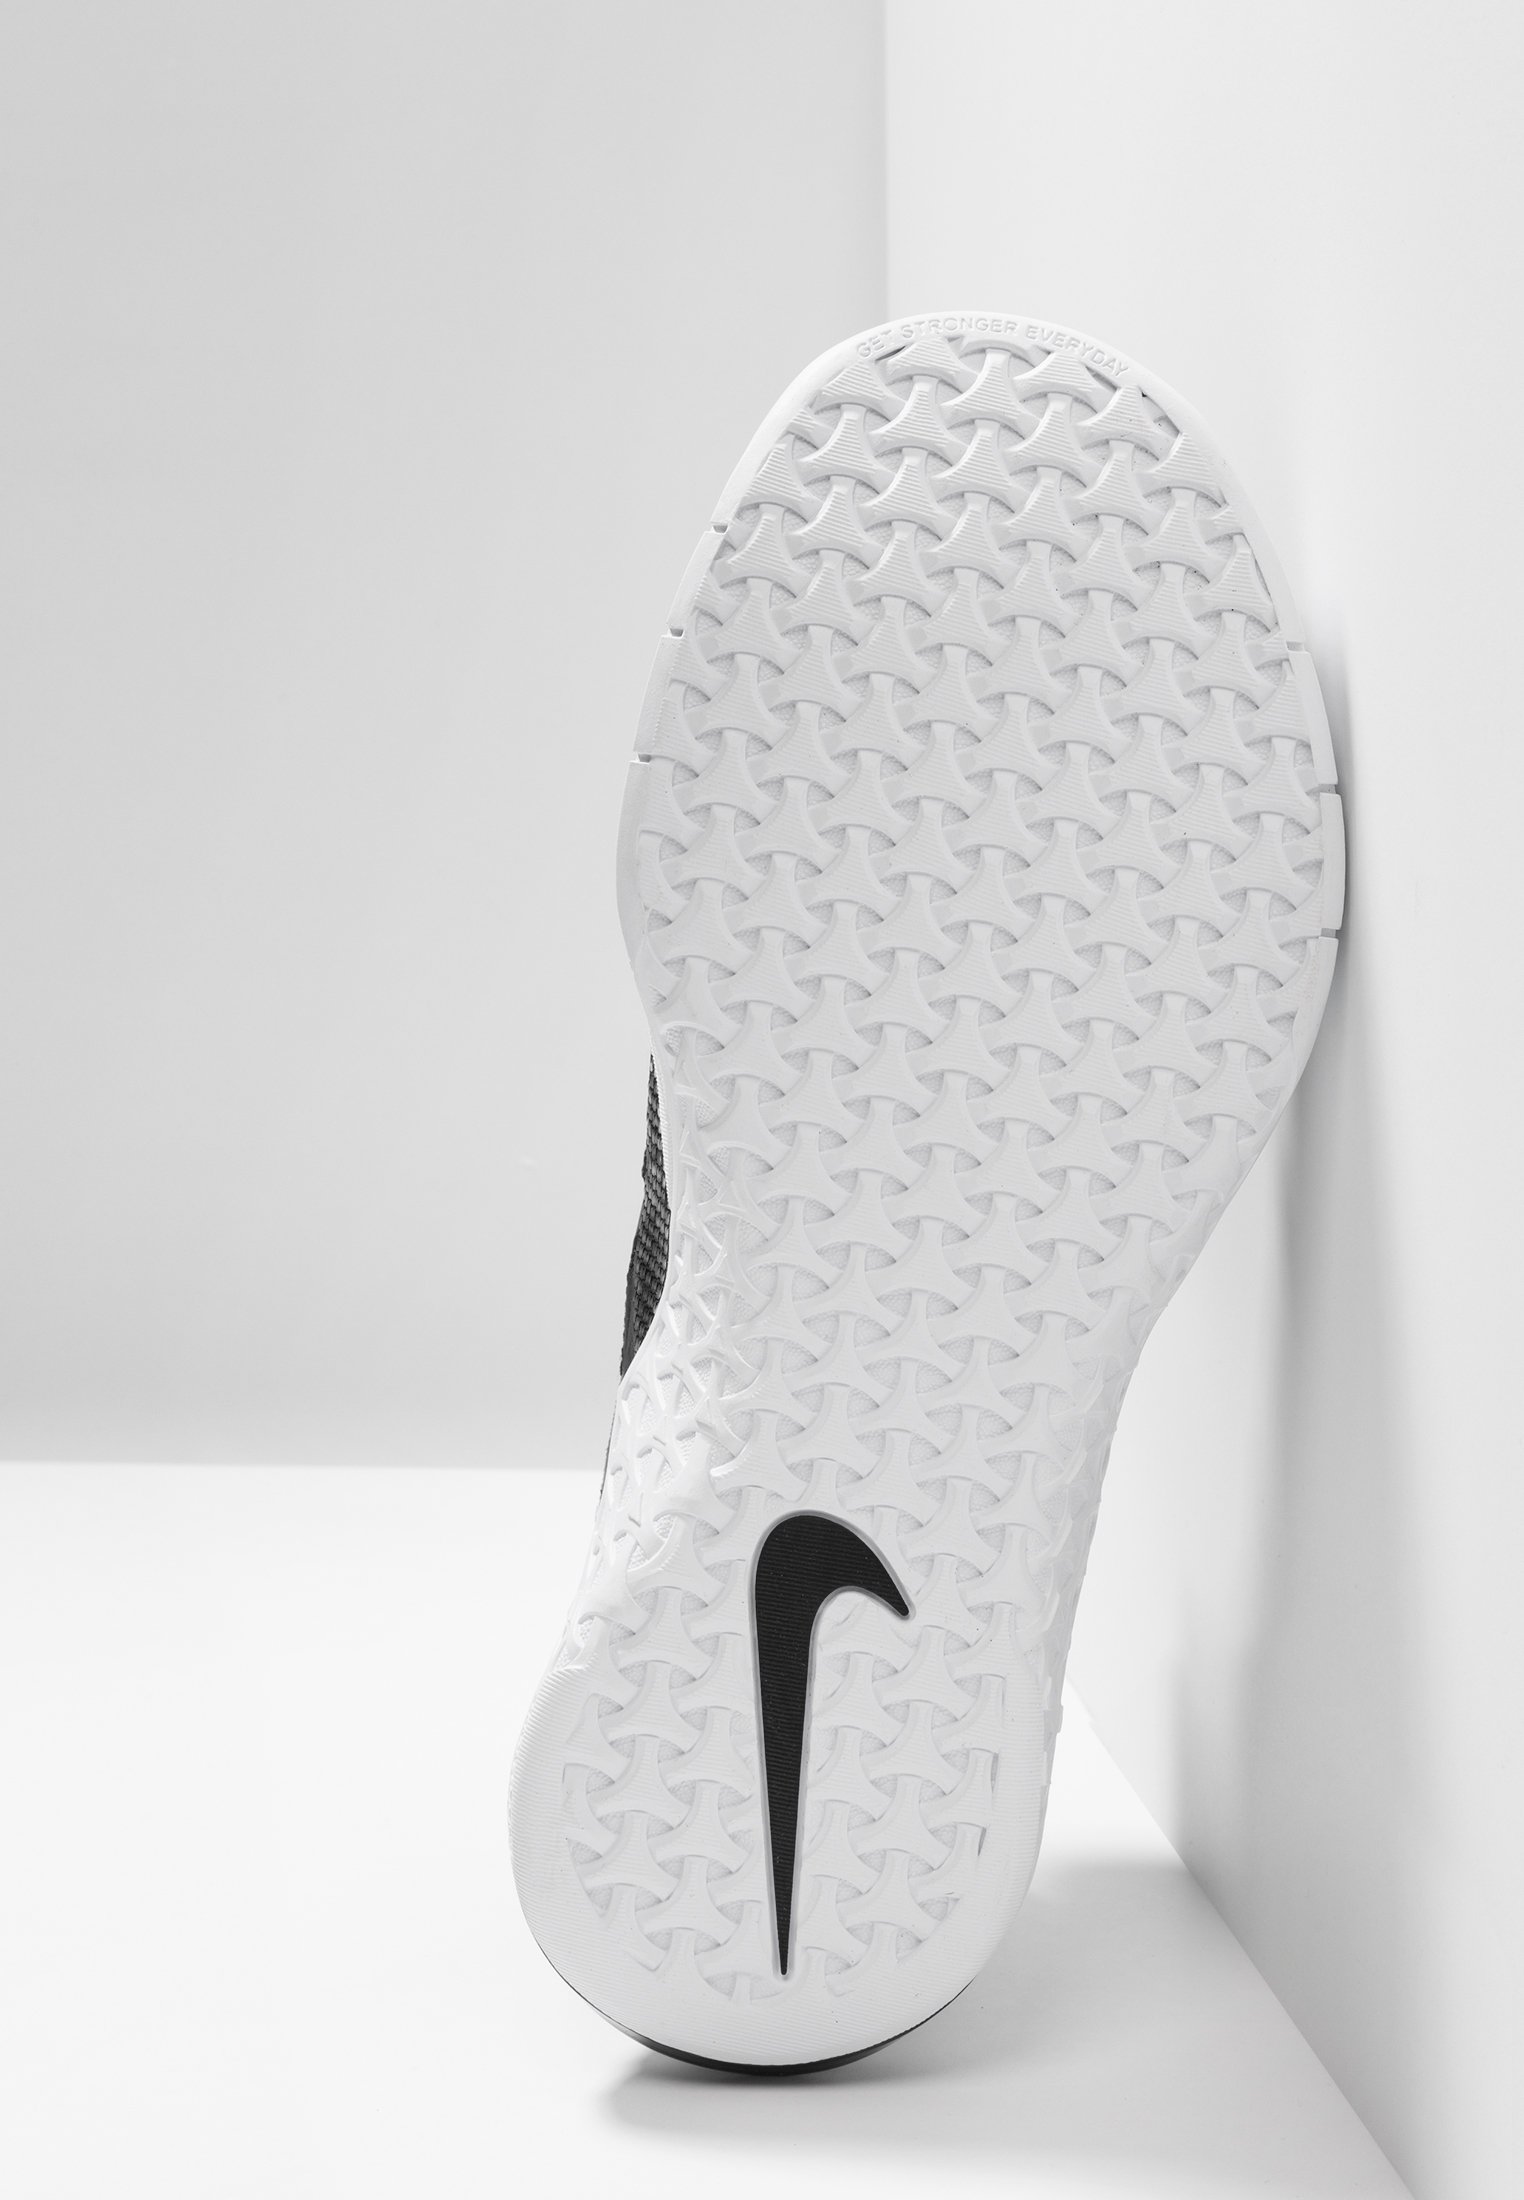 Фото № 5 с приближением к товару «‎Nike Metcon Flyknit 3»